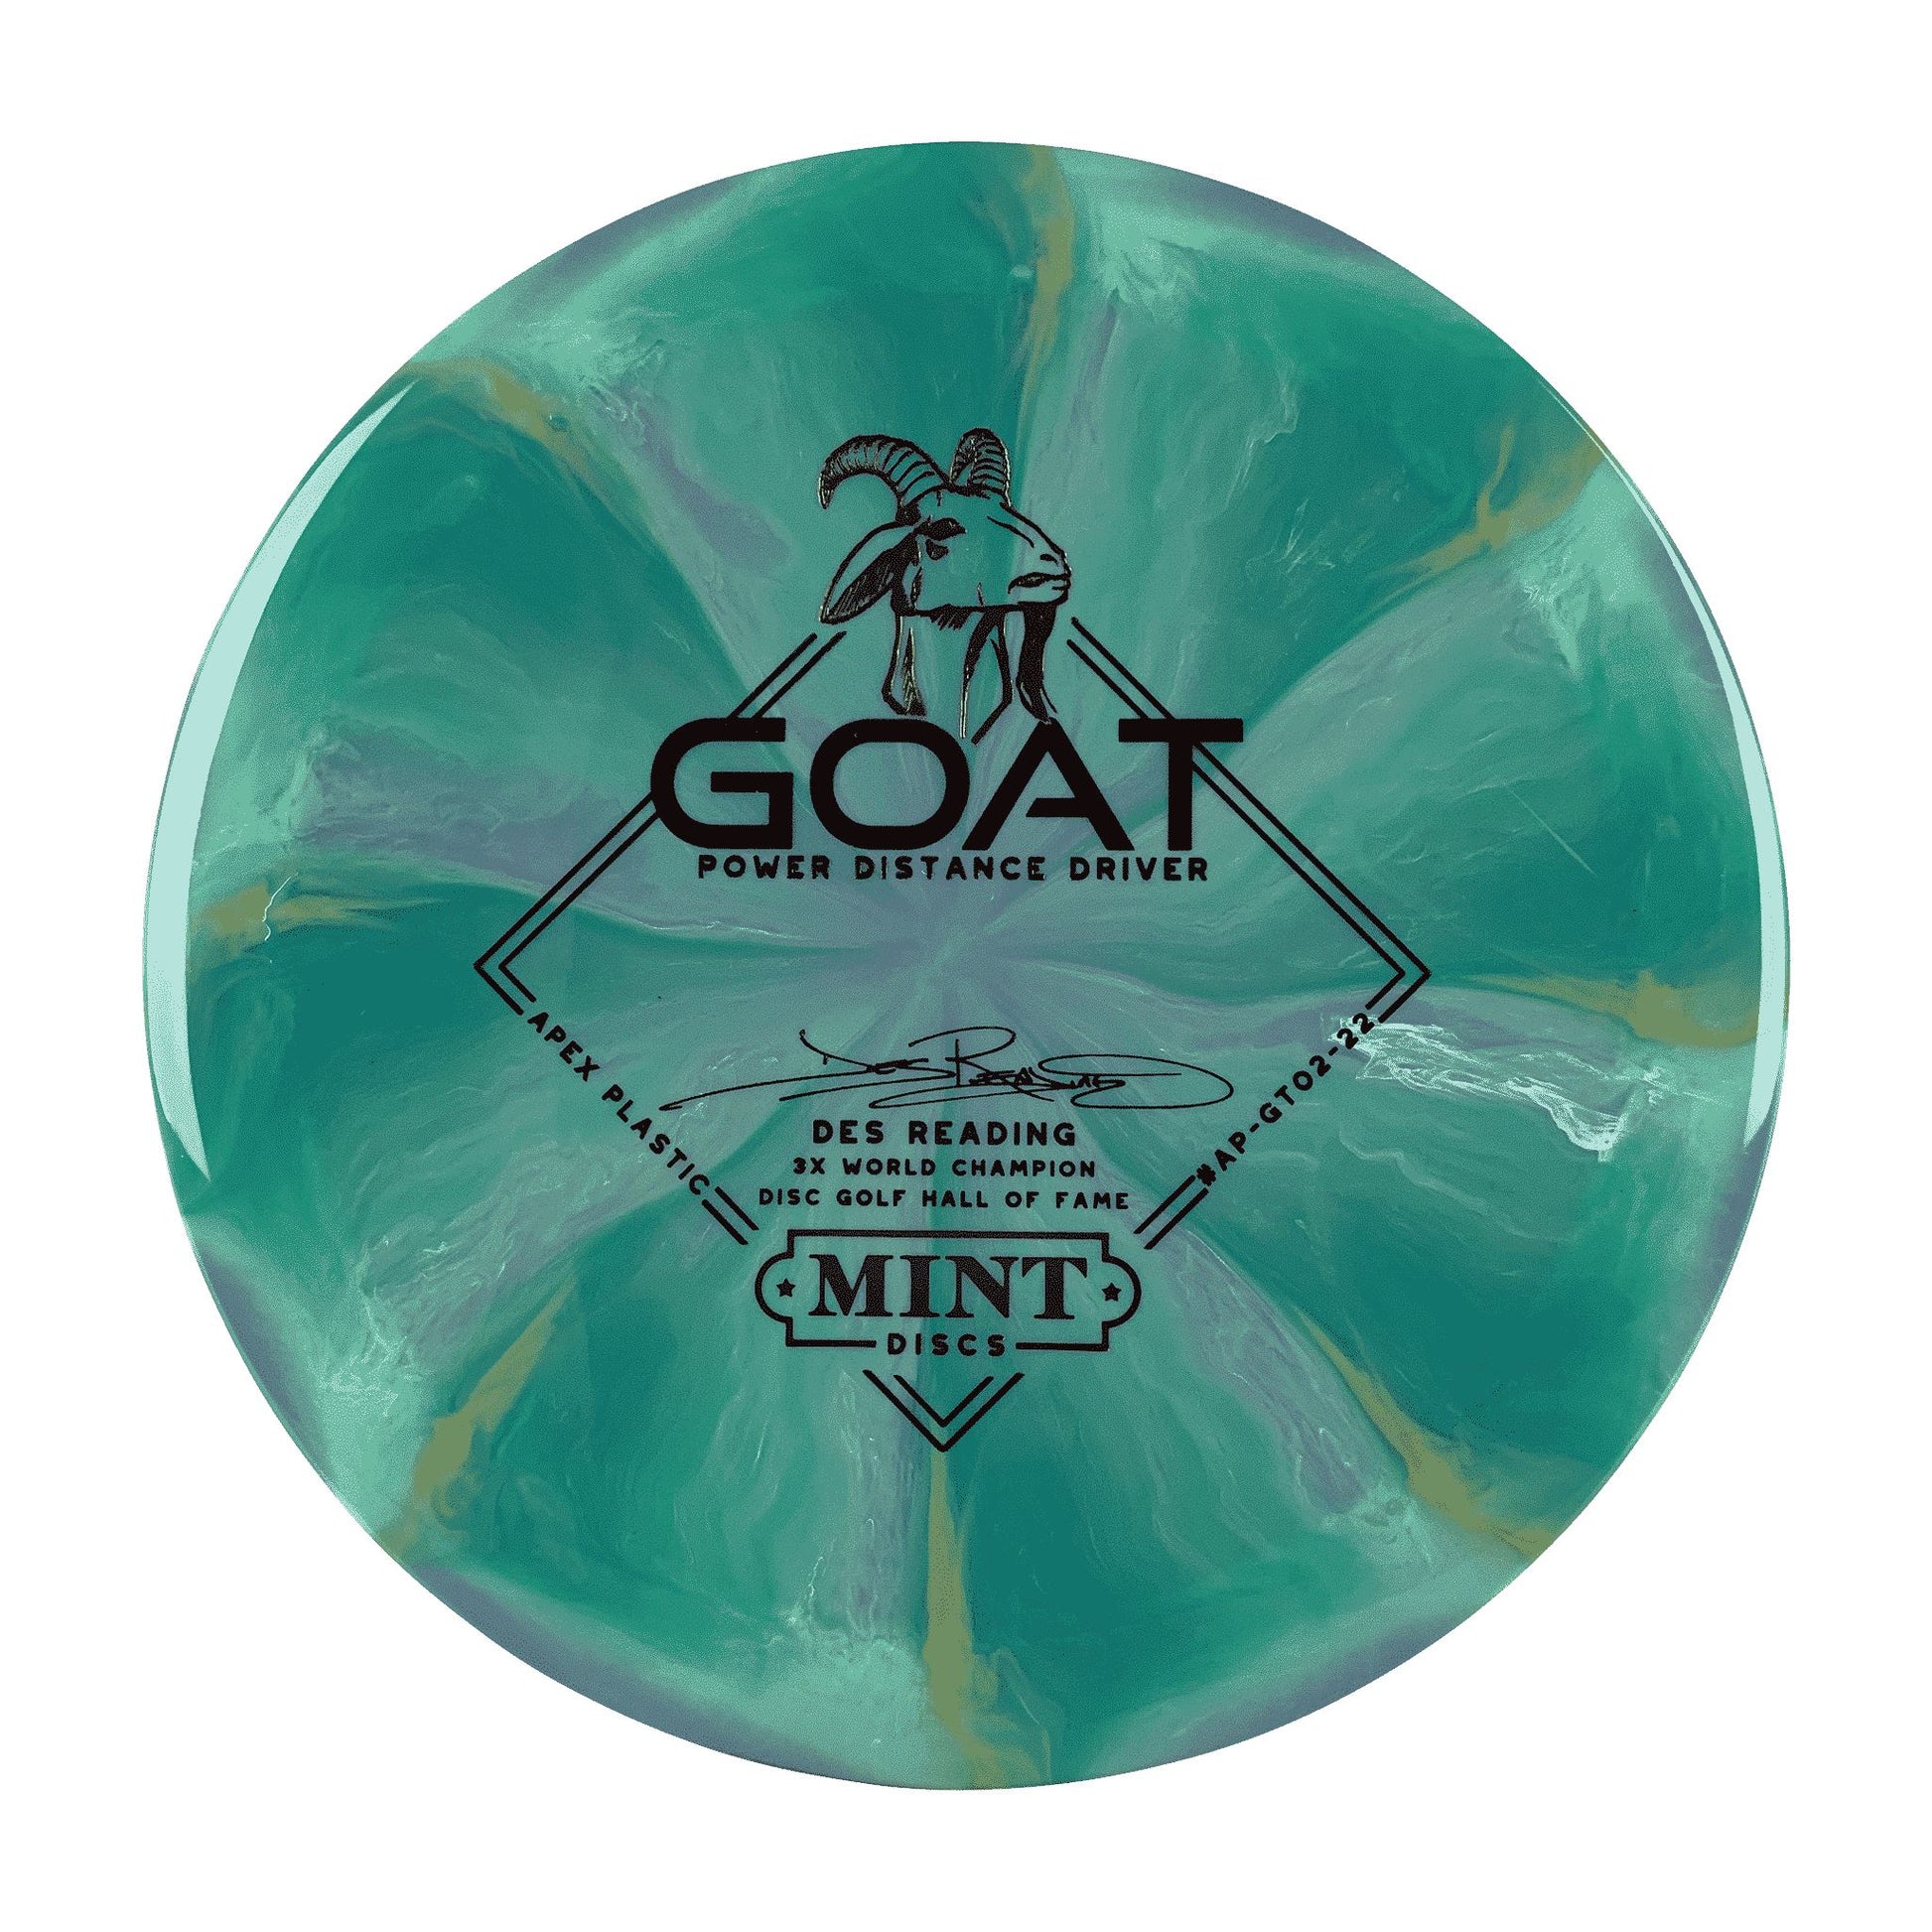 Apex Swirl Goat - Des Reading 3x - AP-GT02-22 Disc Mint Discs multi / teal 174 